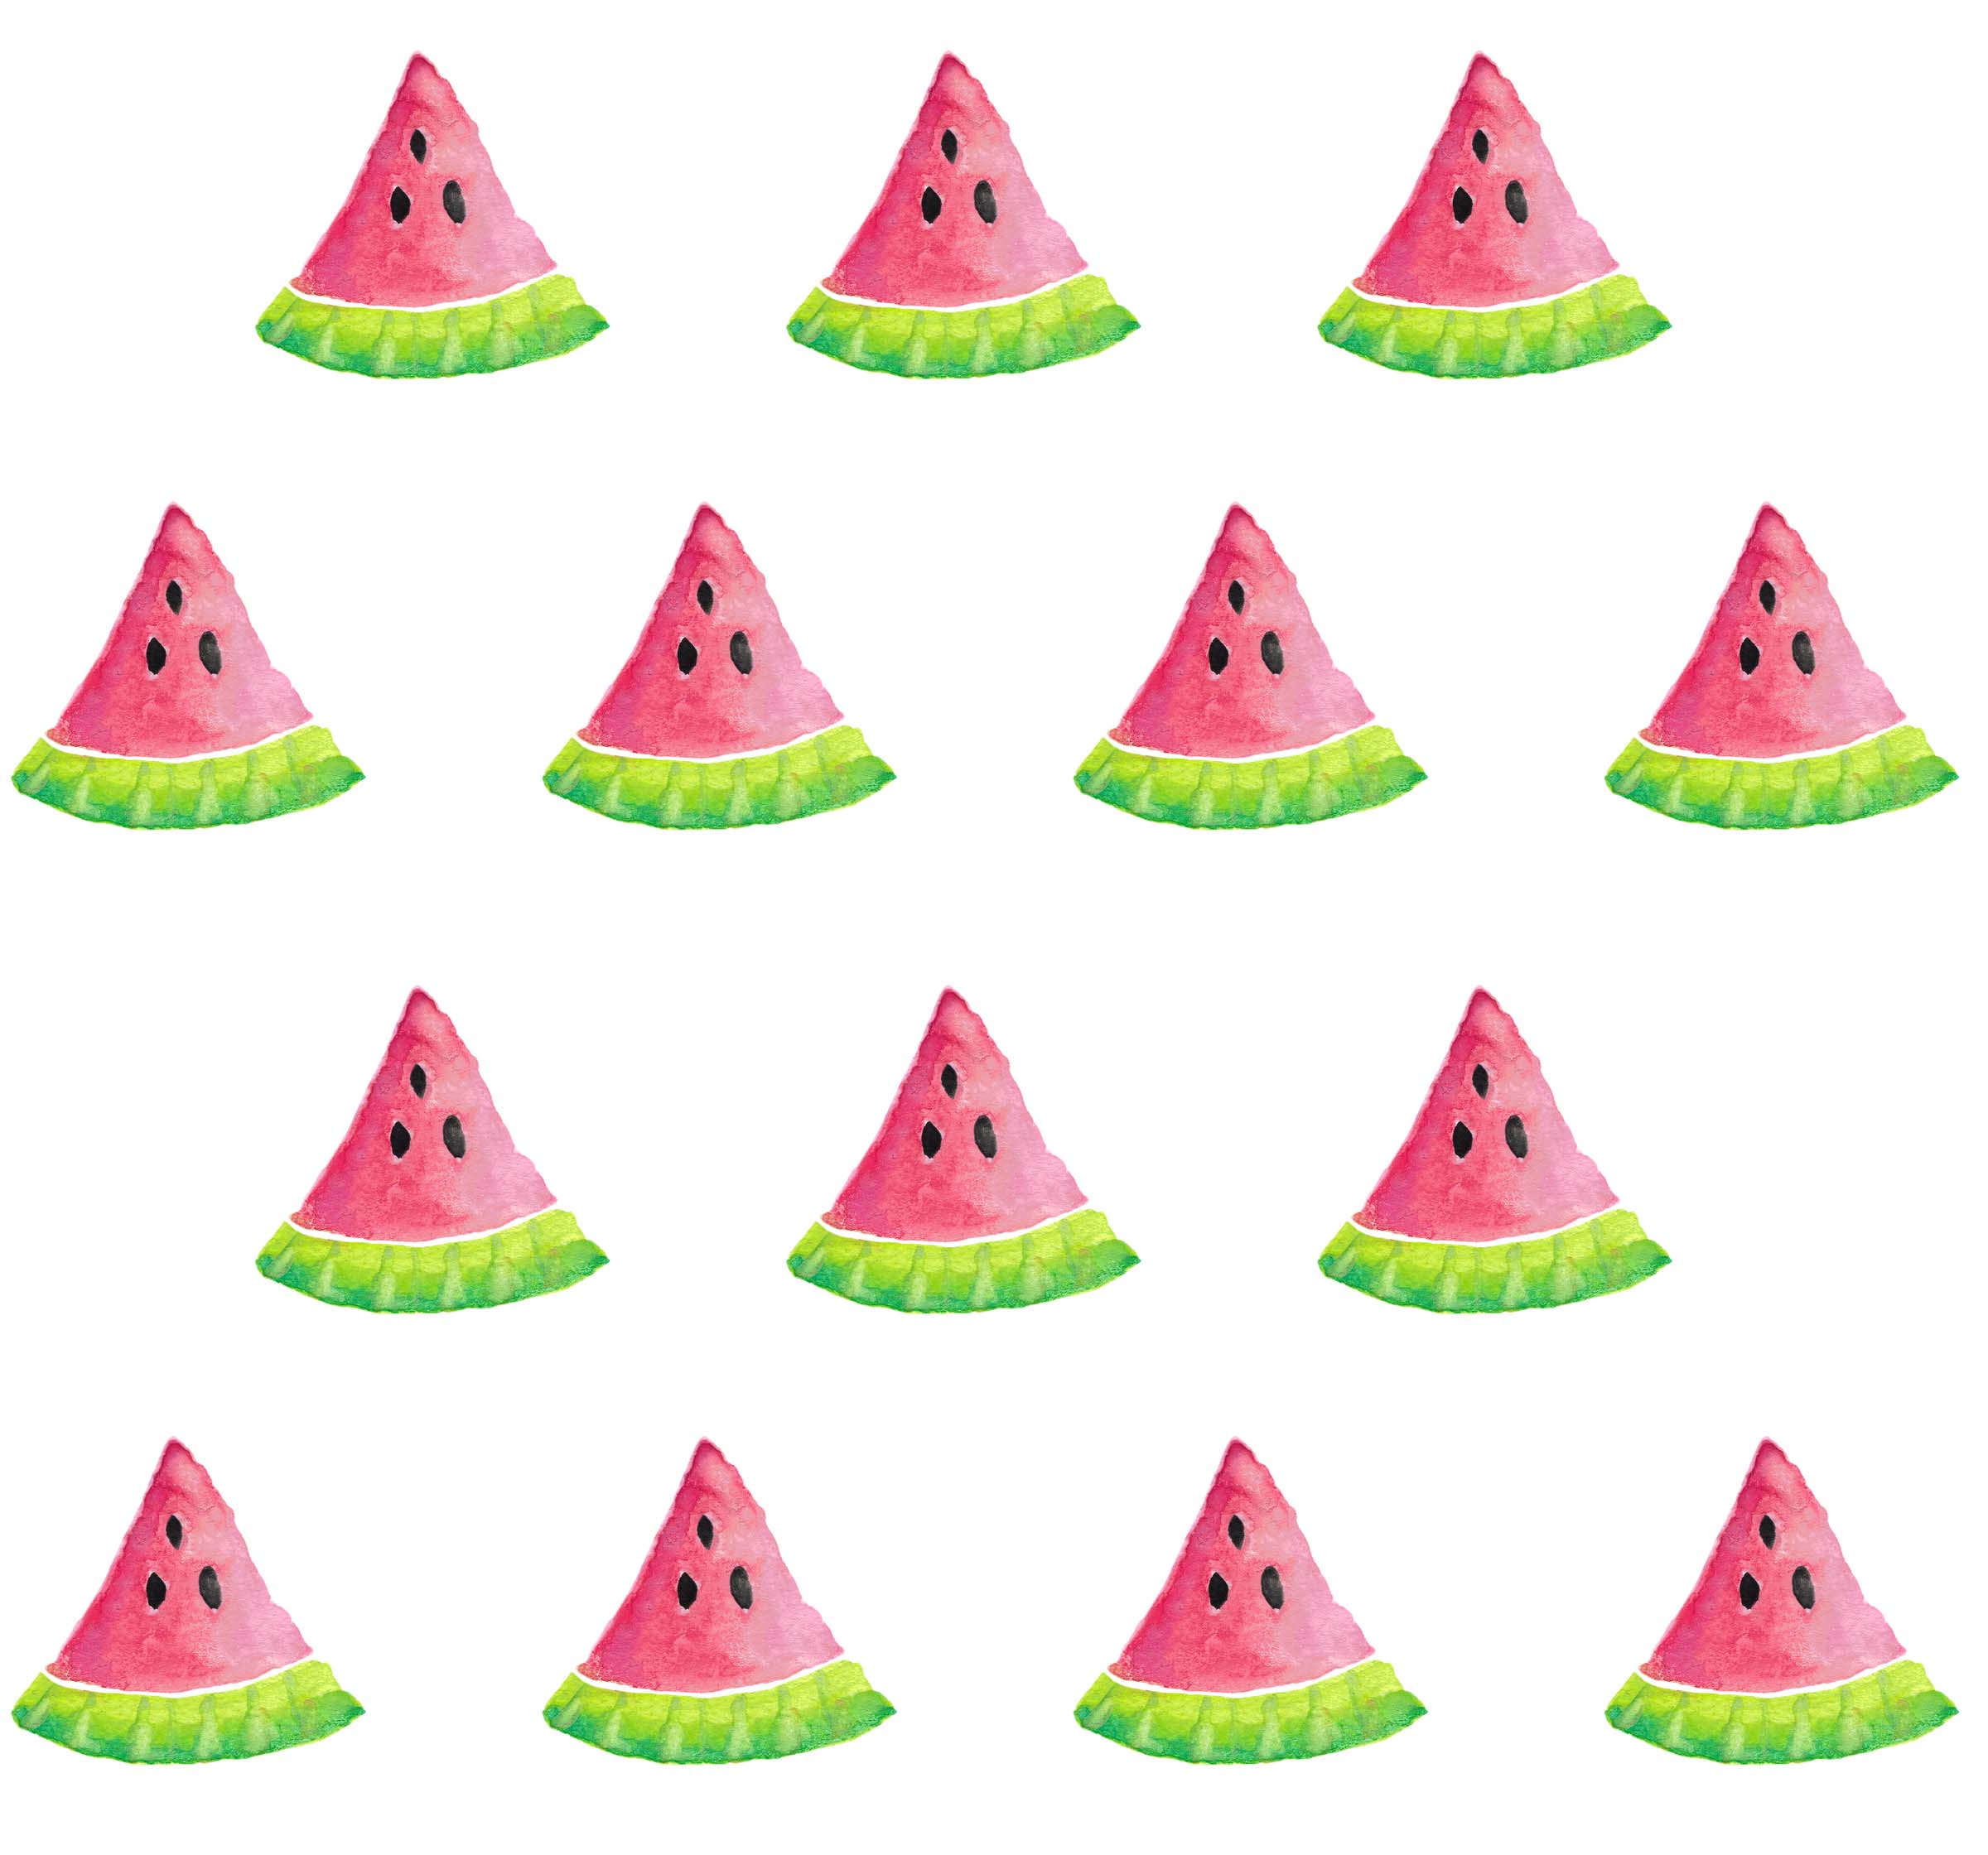 watermelon pattern print by Aliya Bora